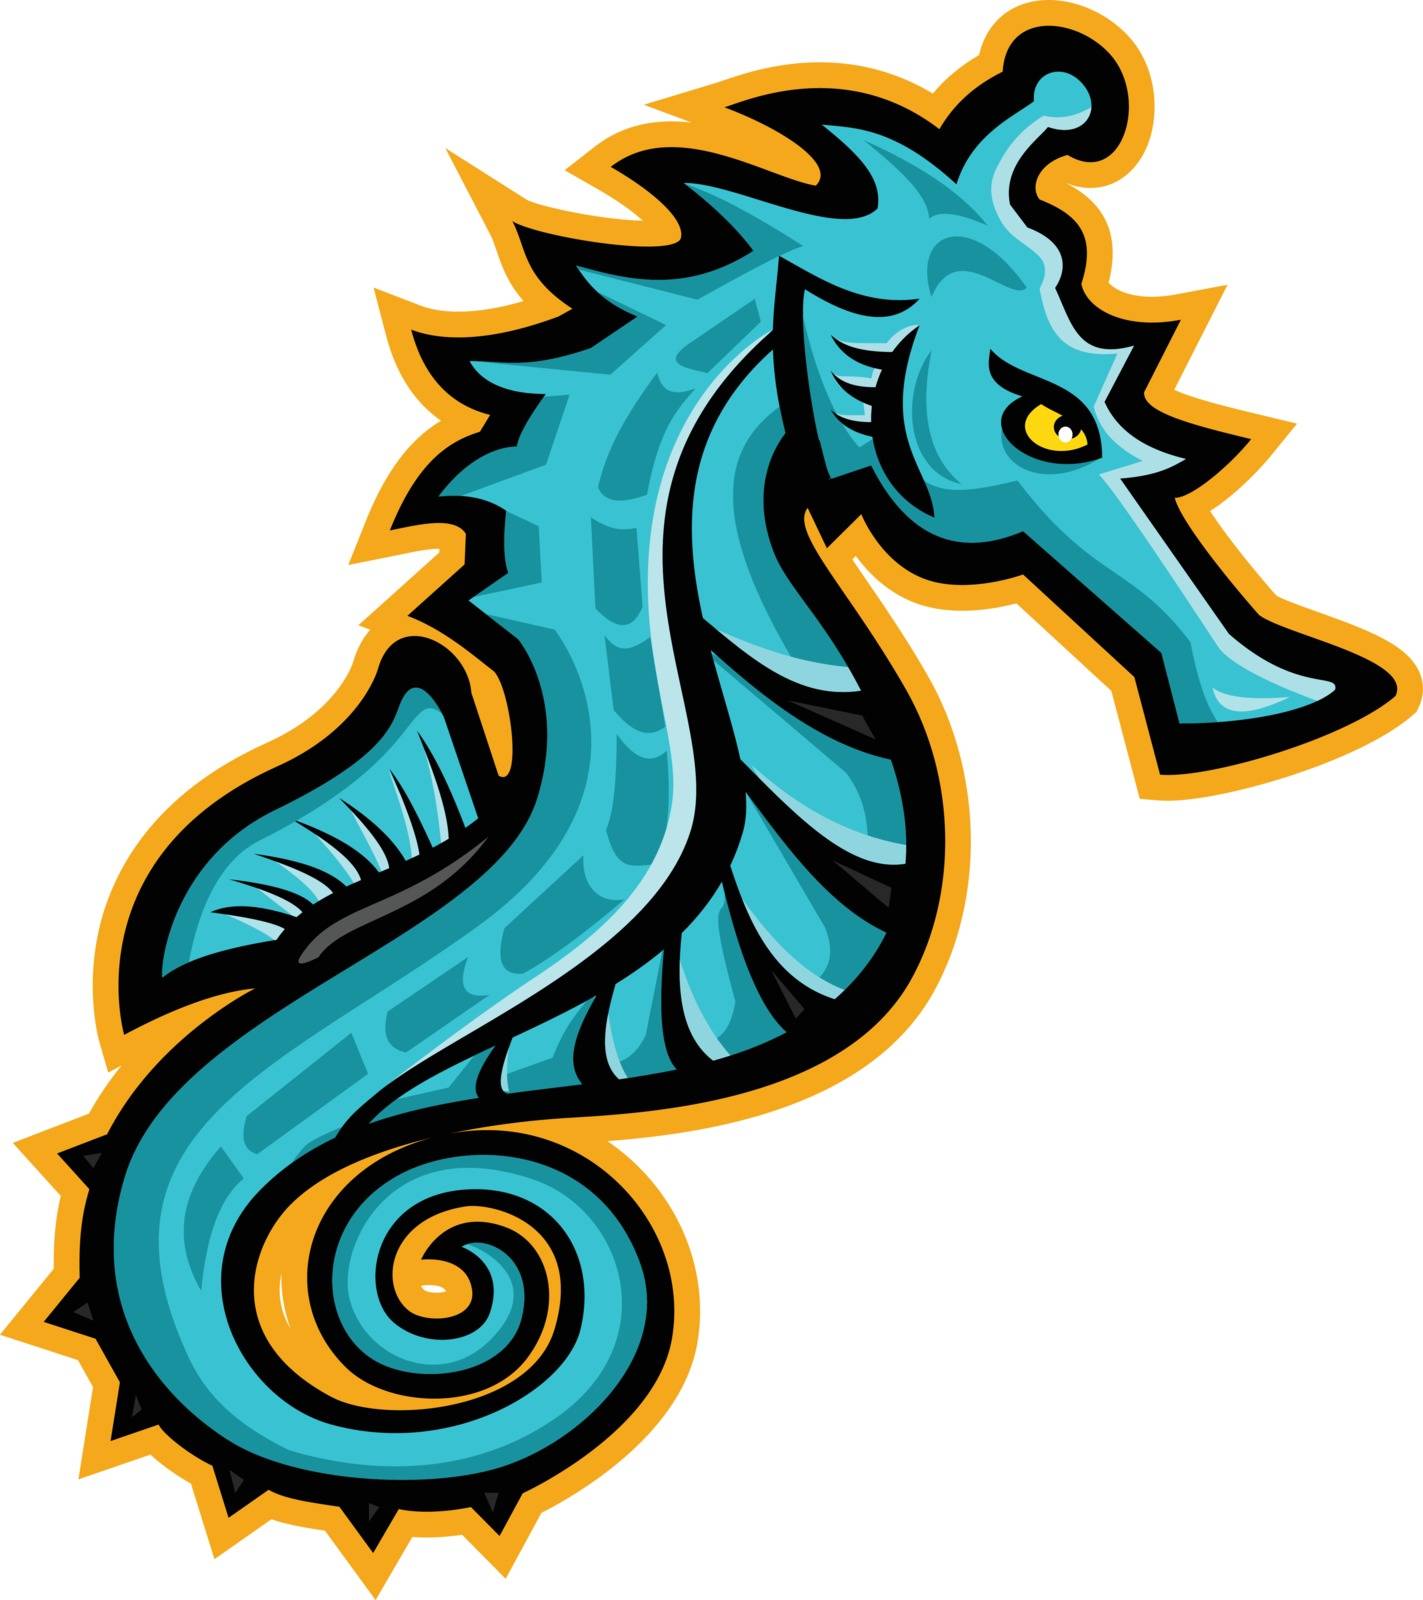 Seahorse Mascot by patrimonio